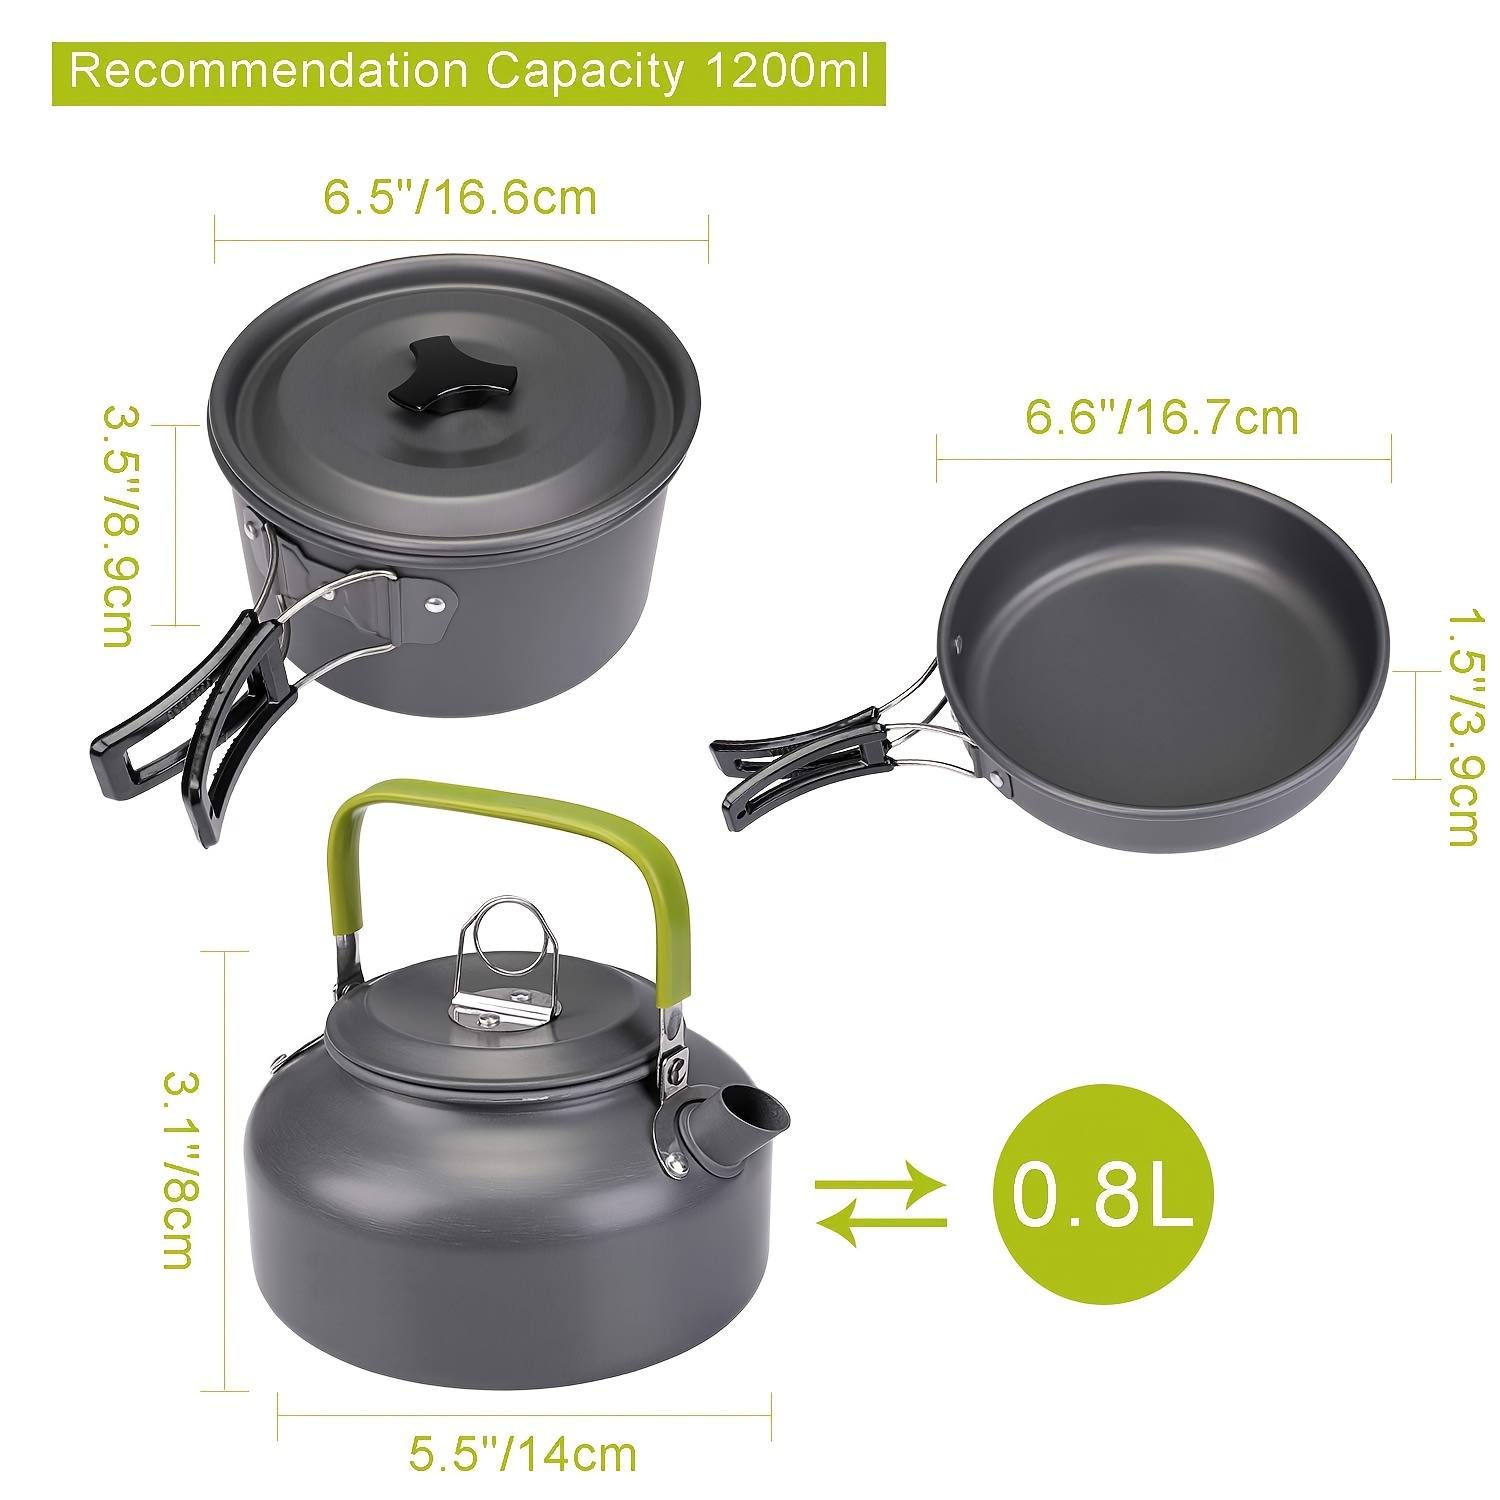 Lightweight & Portable Camping Cookware Set - Non-stick Pots